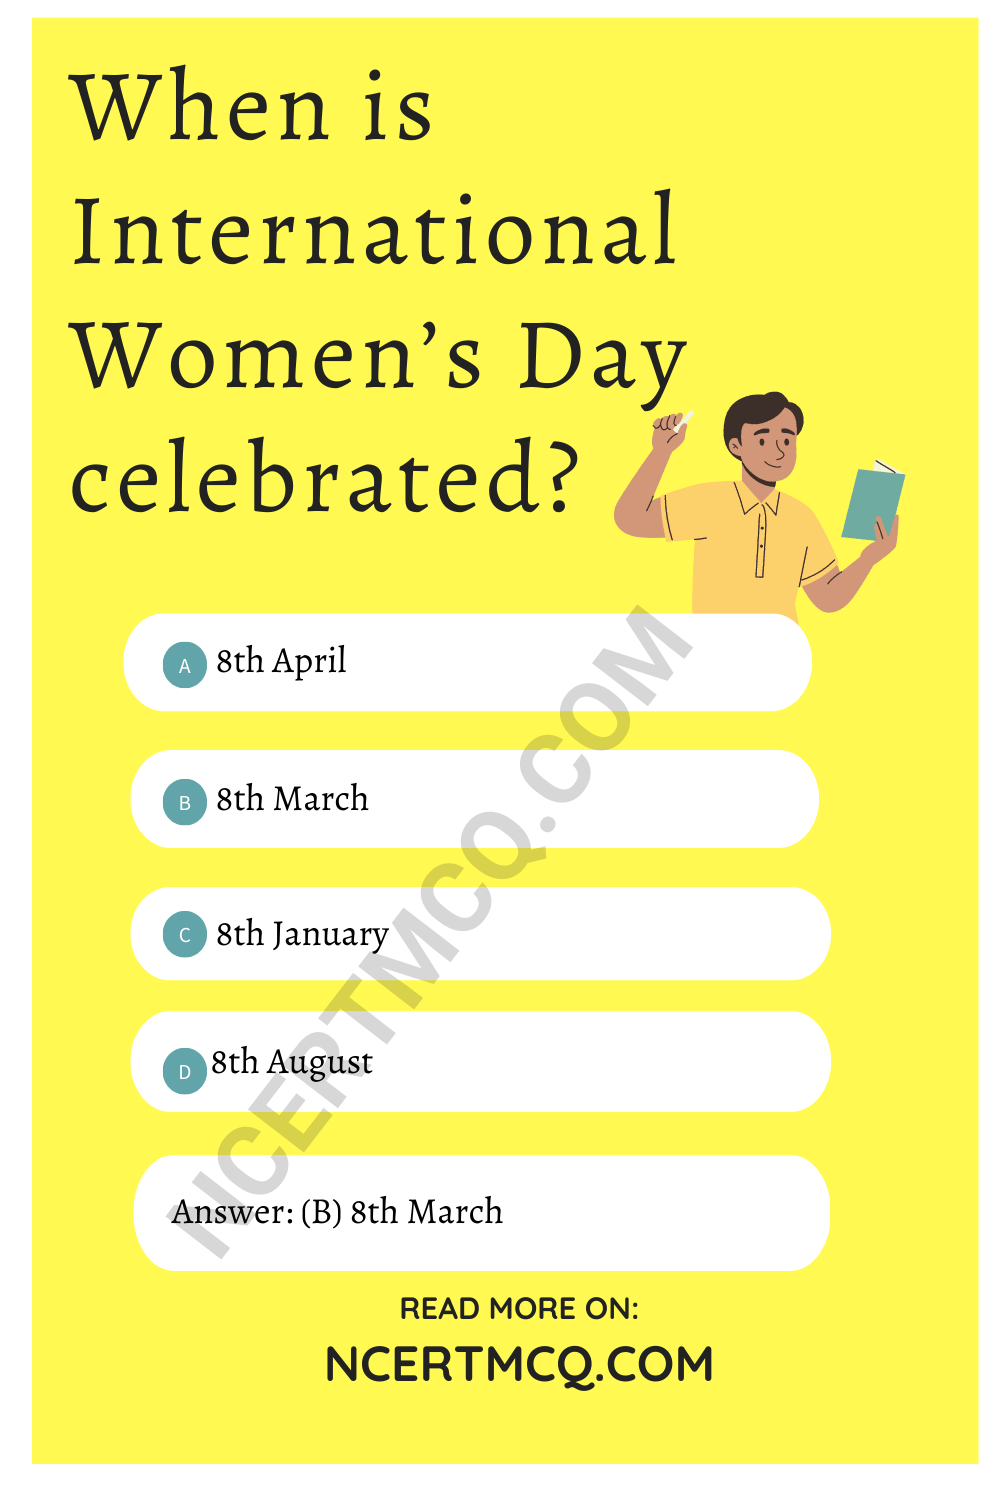 When is International Women’s Day celebrated?